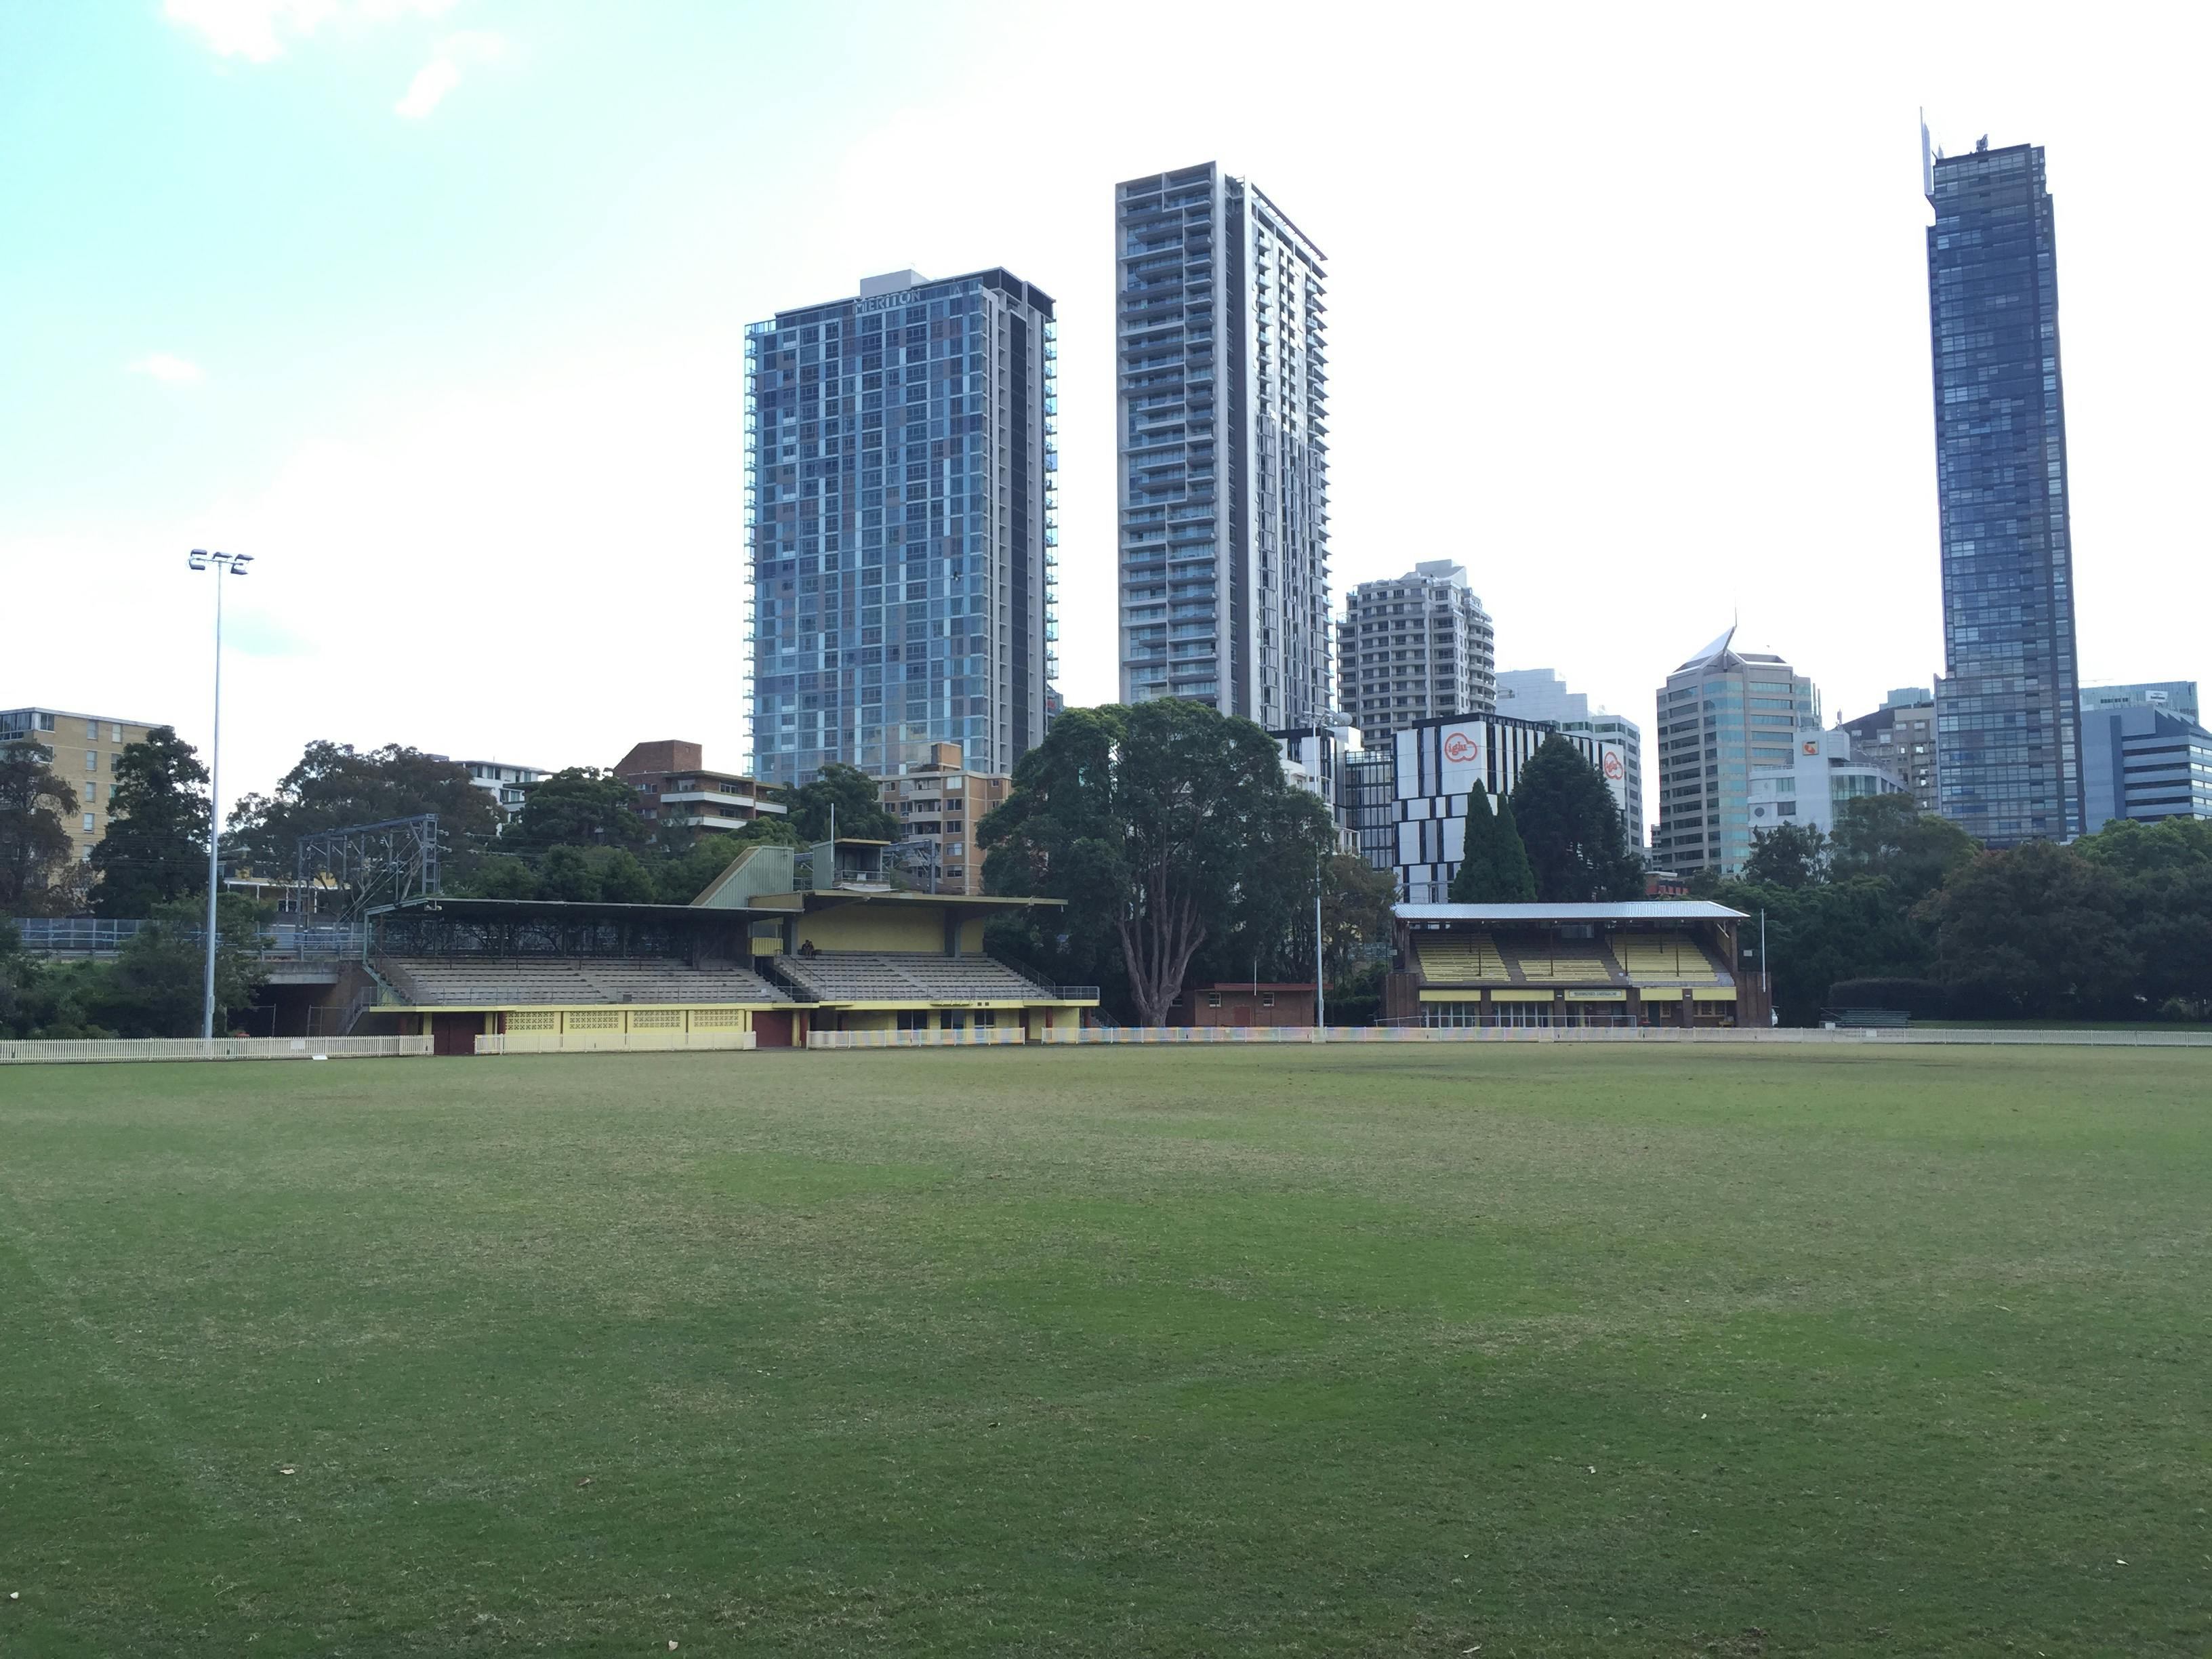 View of grandstands